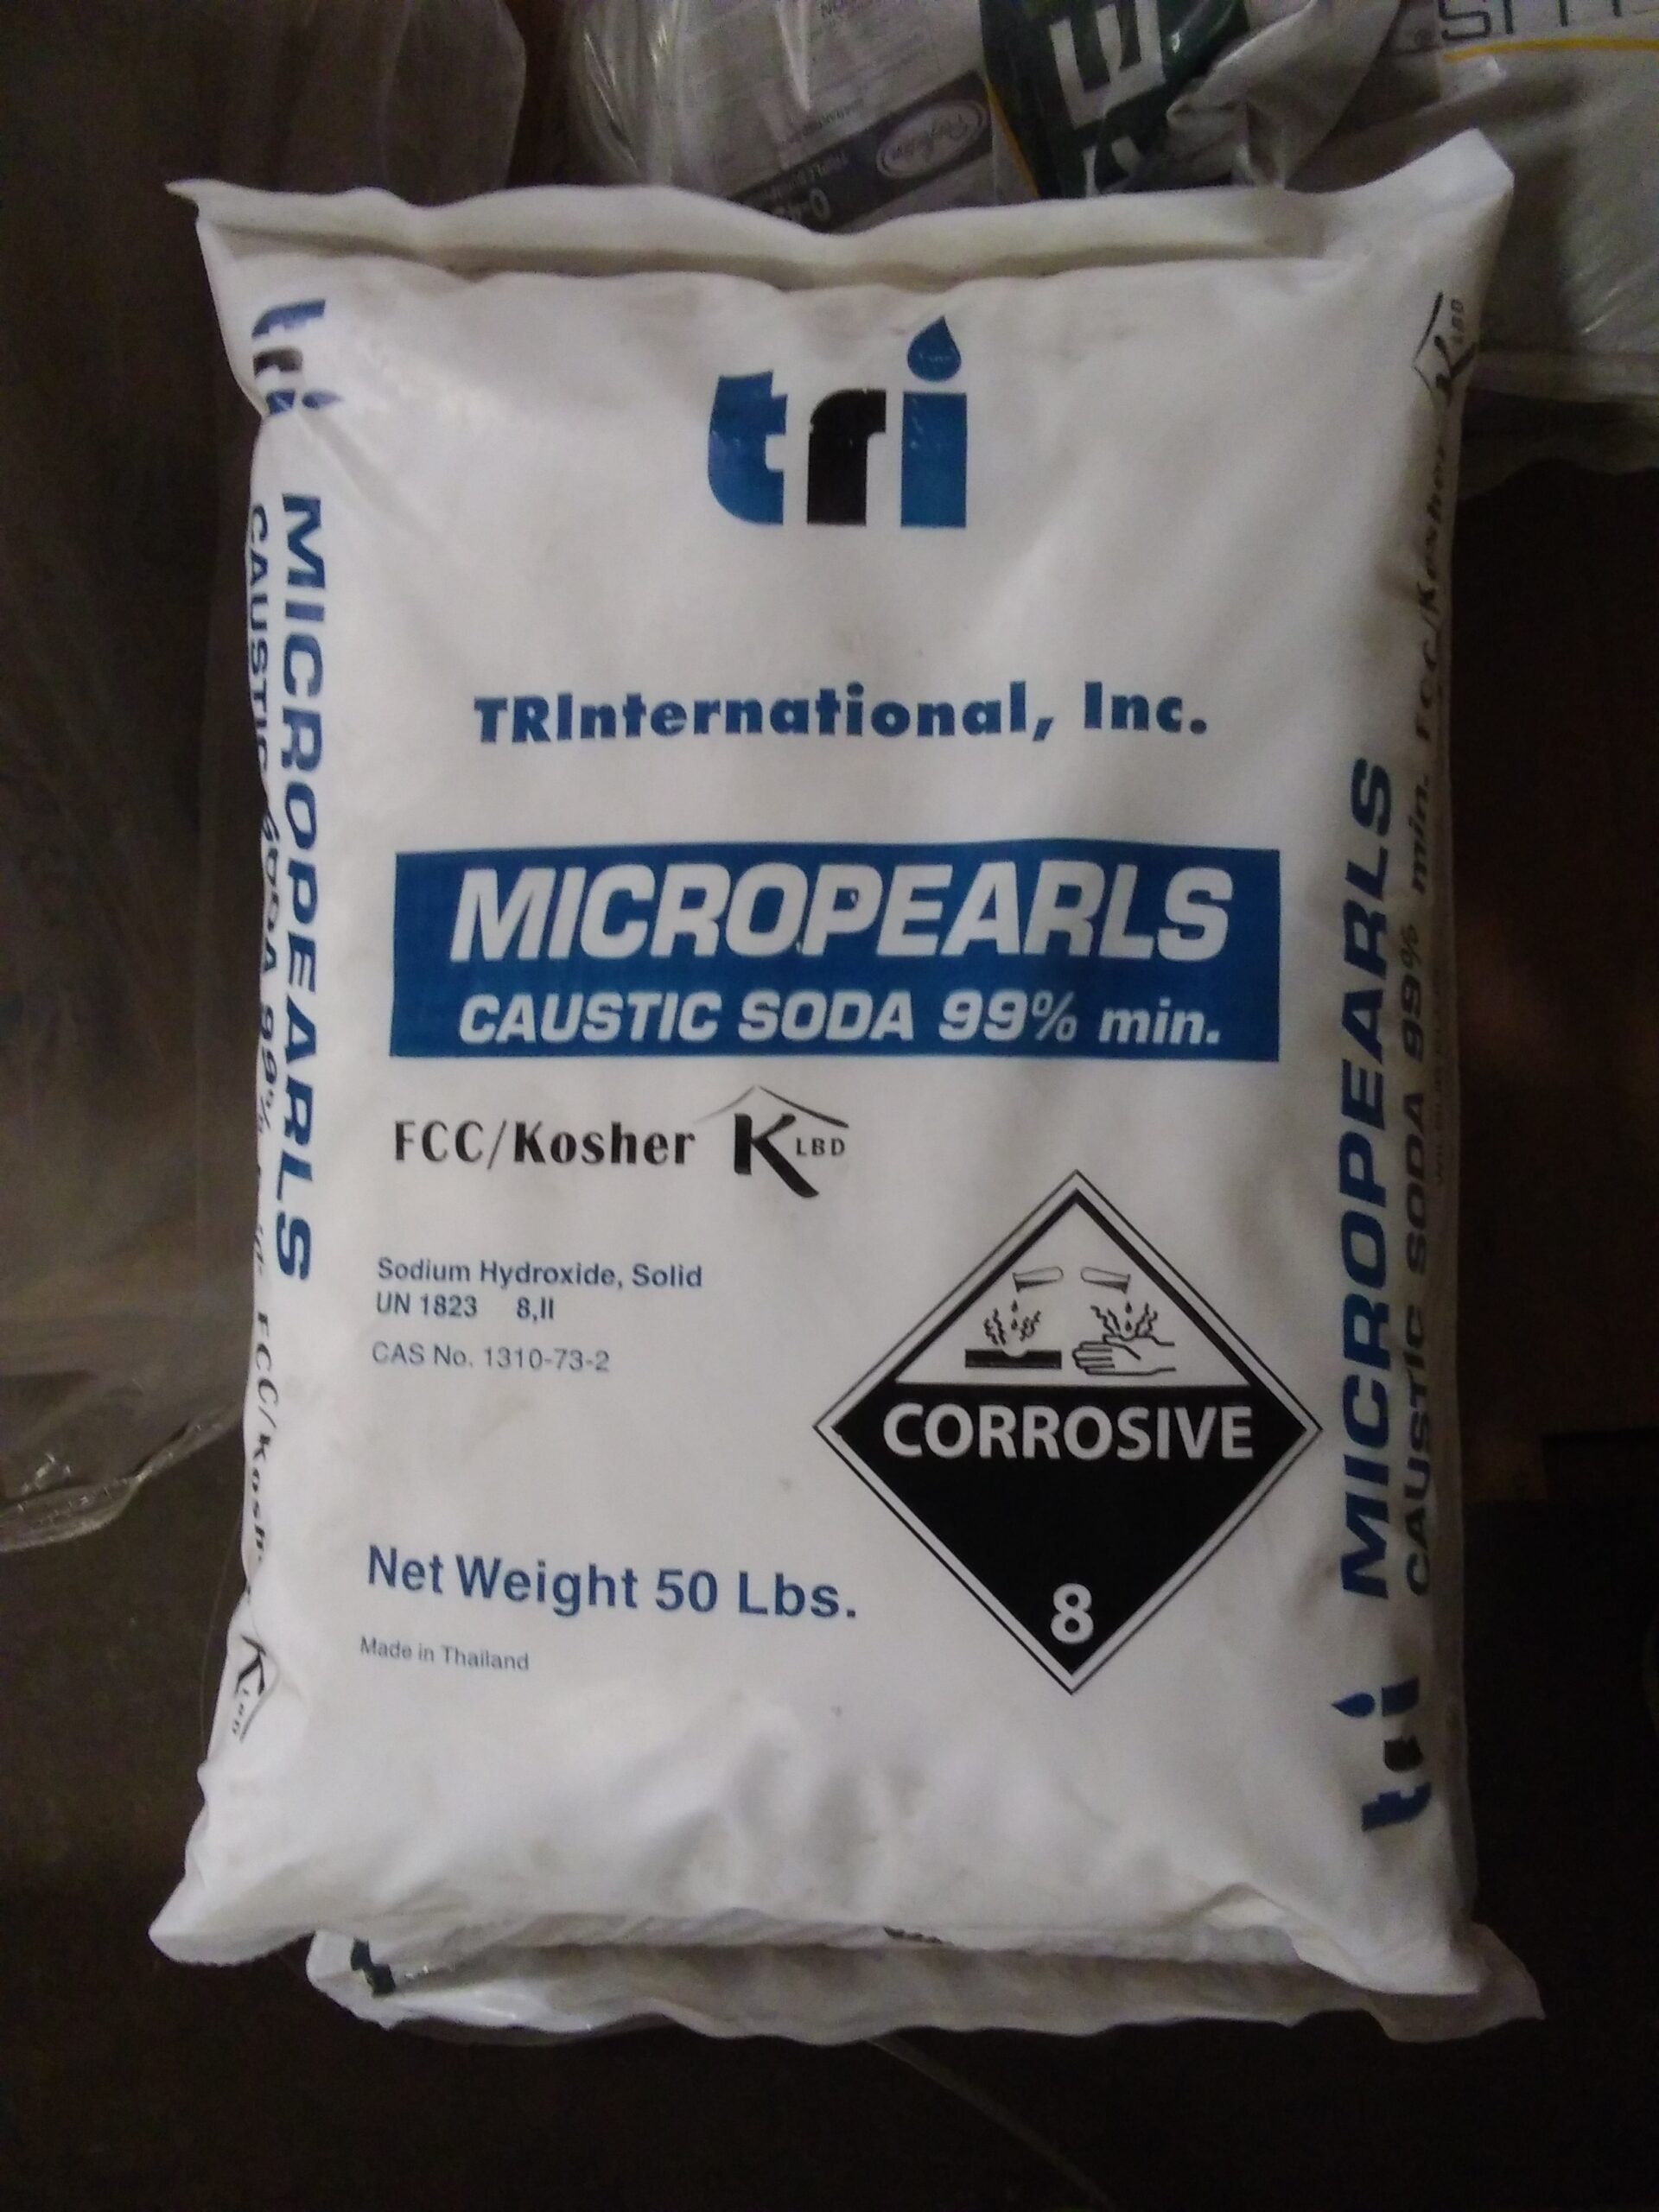 Sodium Hydroxide (Lye) Pearl Beads 99% Pure - Midwest Lubricants LLC.